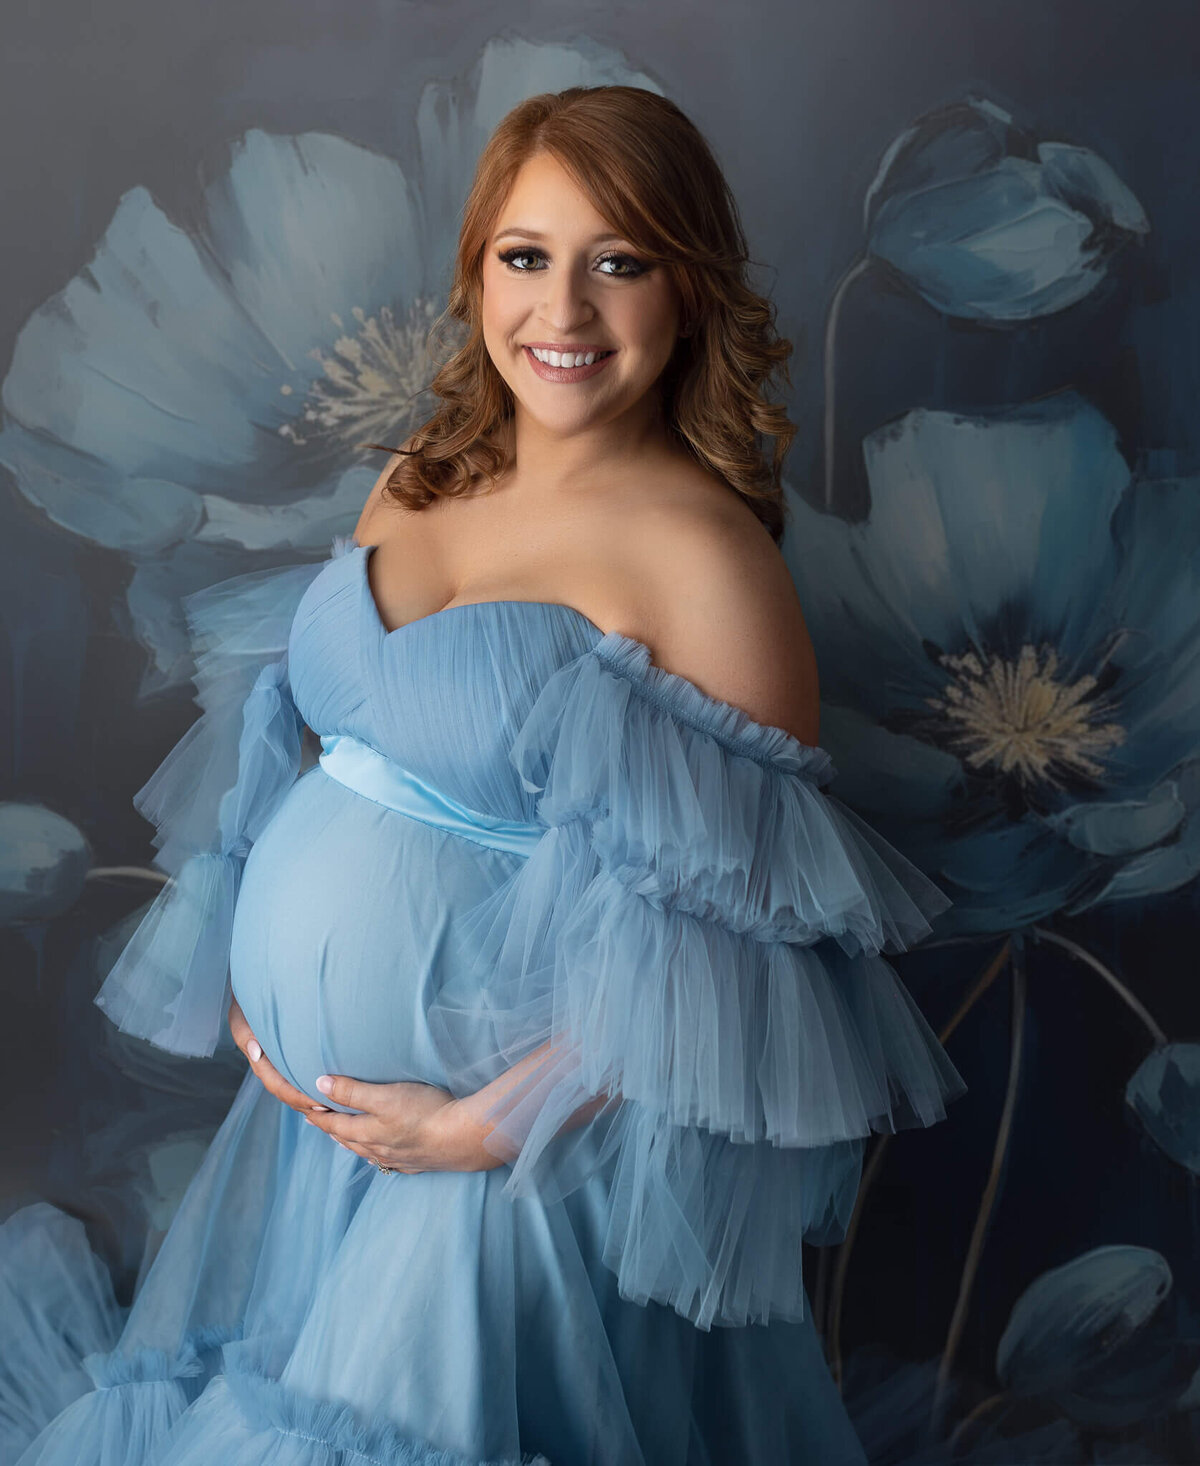 akron-maternity-photographer-kendrahdamis-4